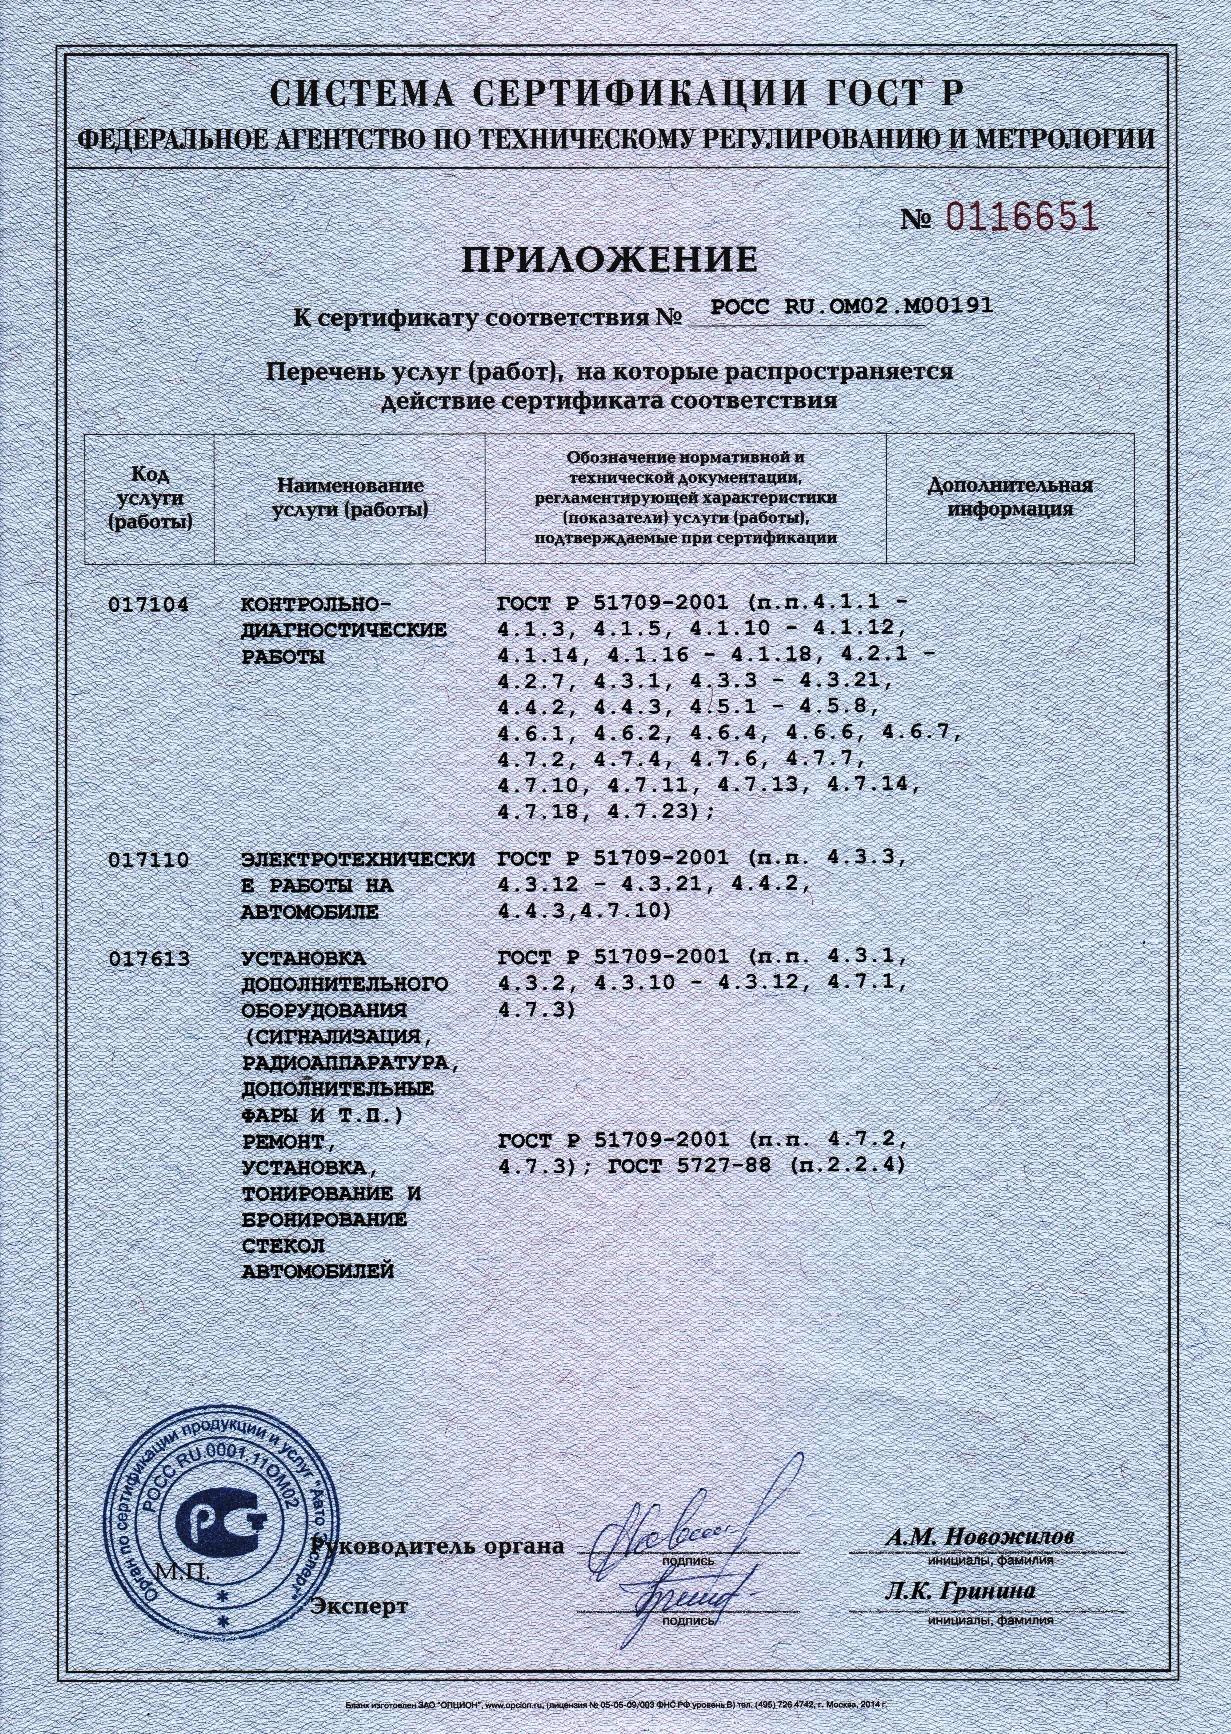 install-certificate-2